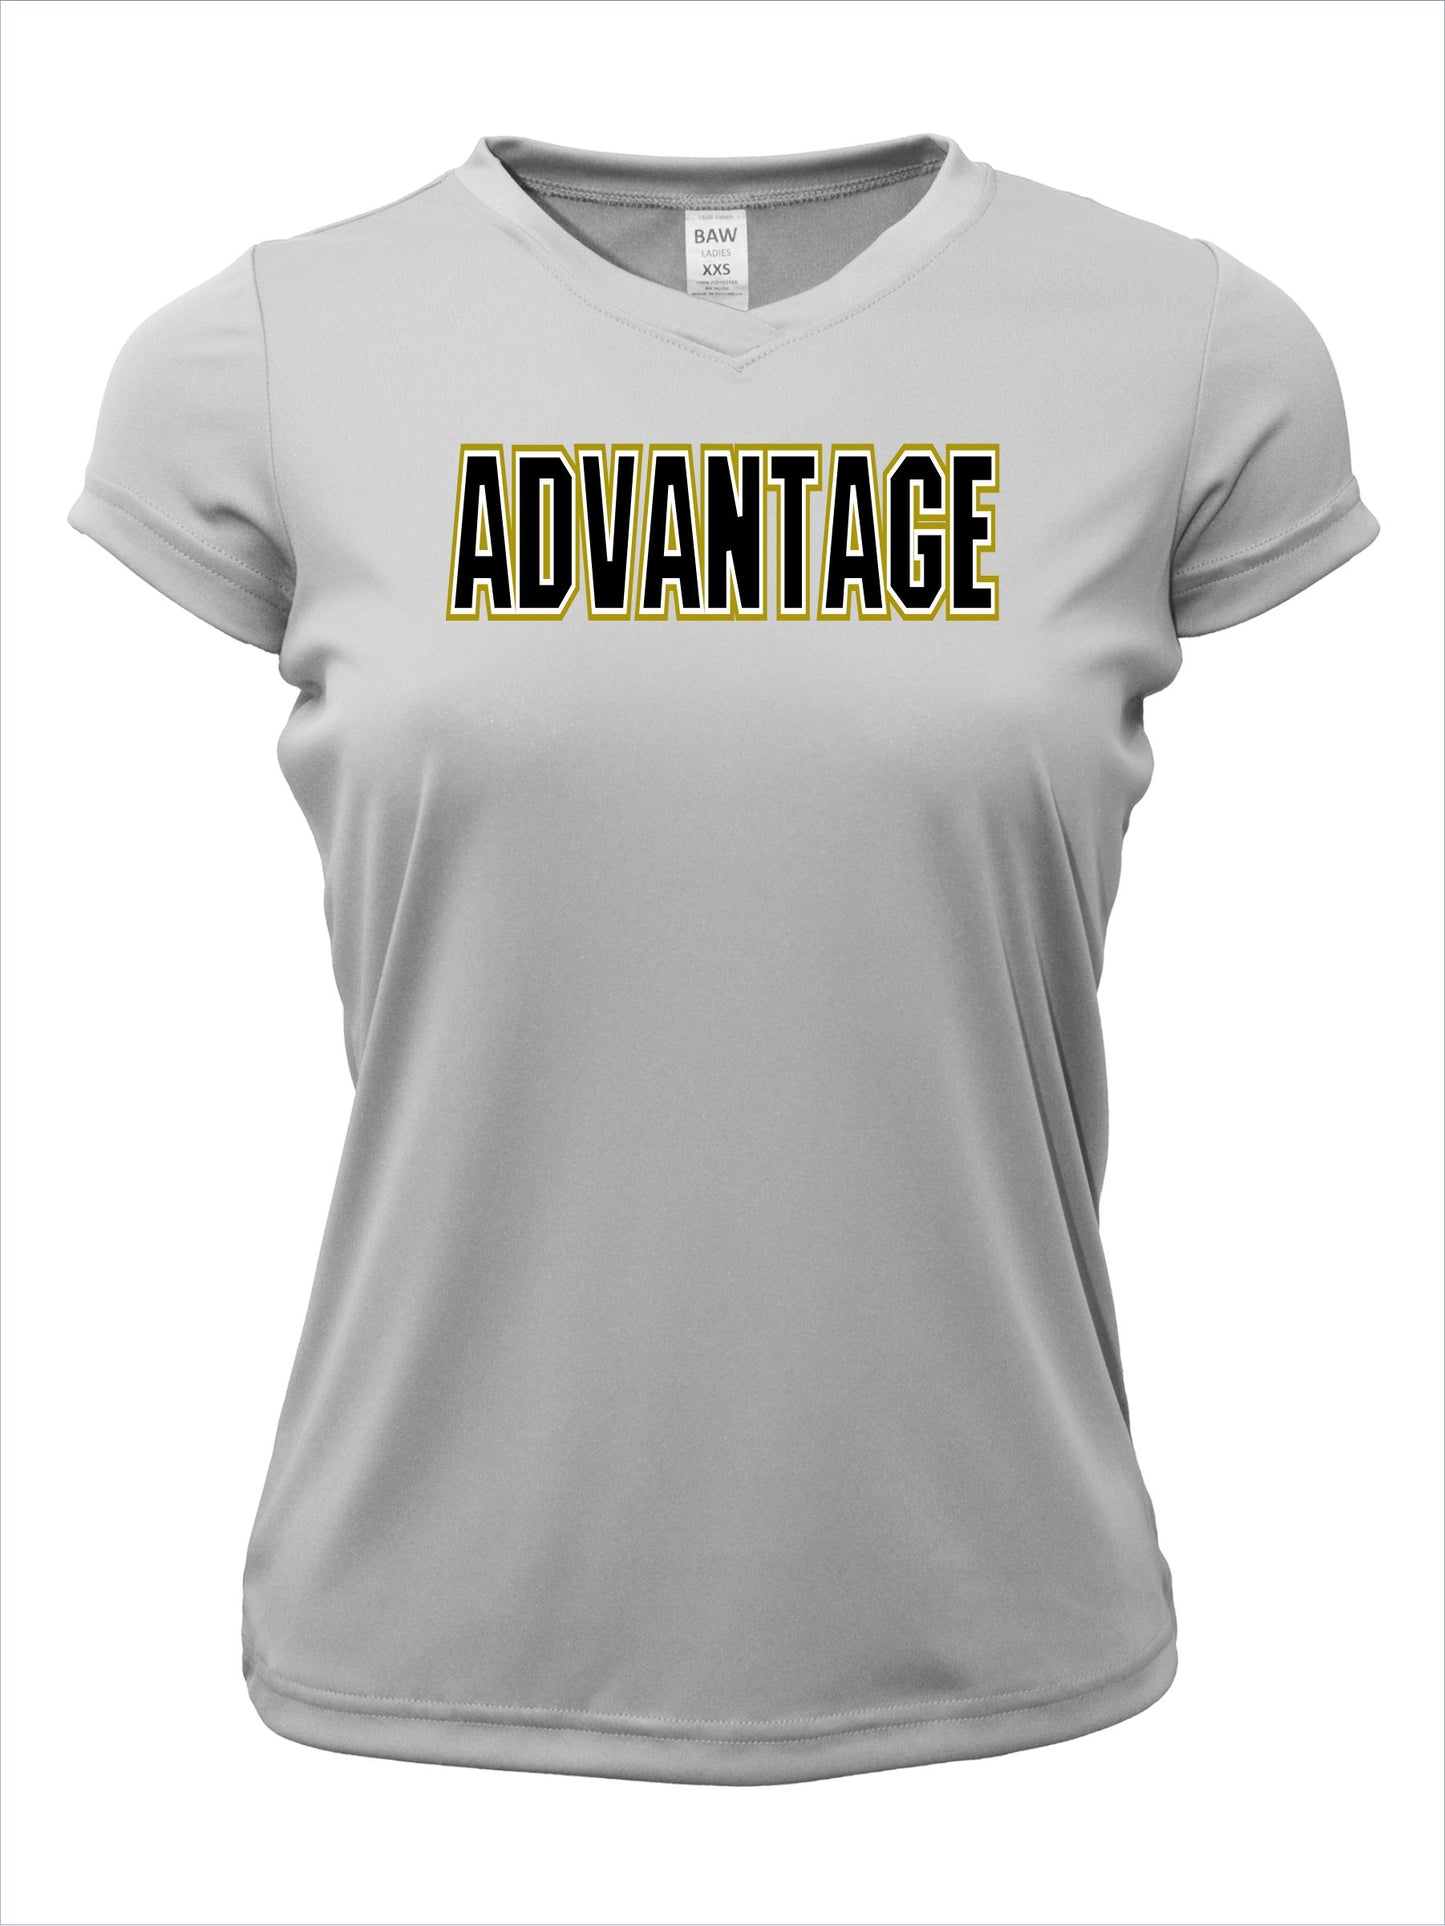 Ladies V-Neck "Advantage" Dri-Fit T-Shirt